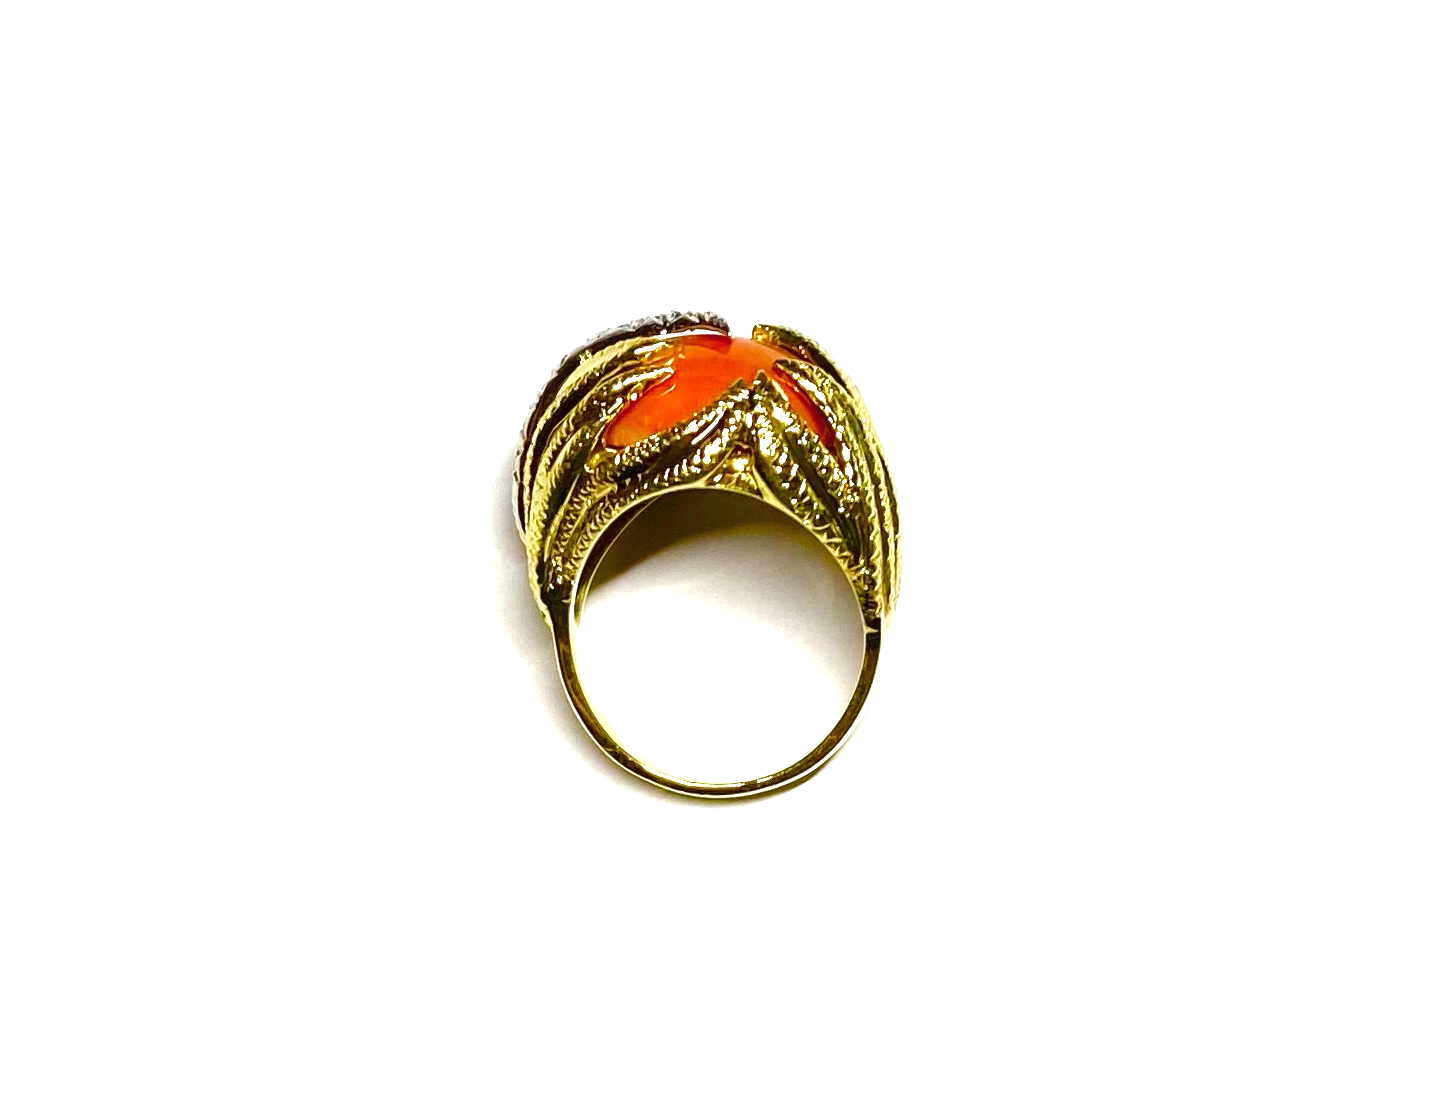 Vintage coral and diamond ring circa 1960 – 1970-2